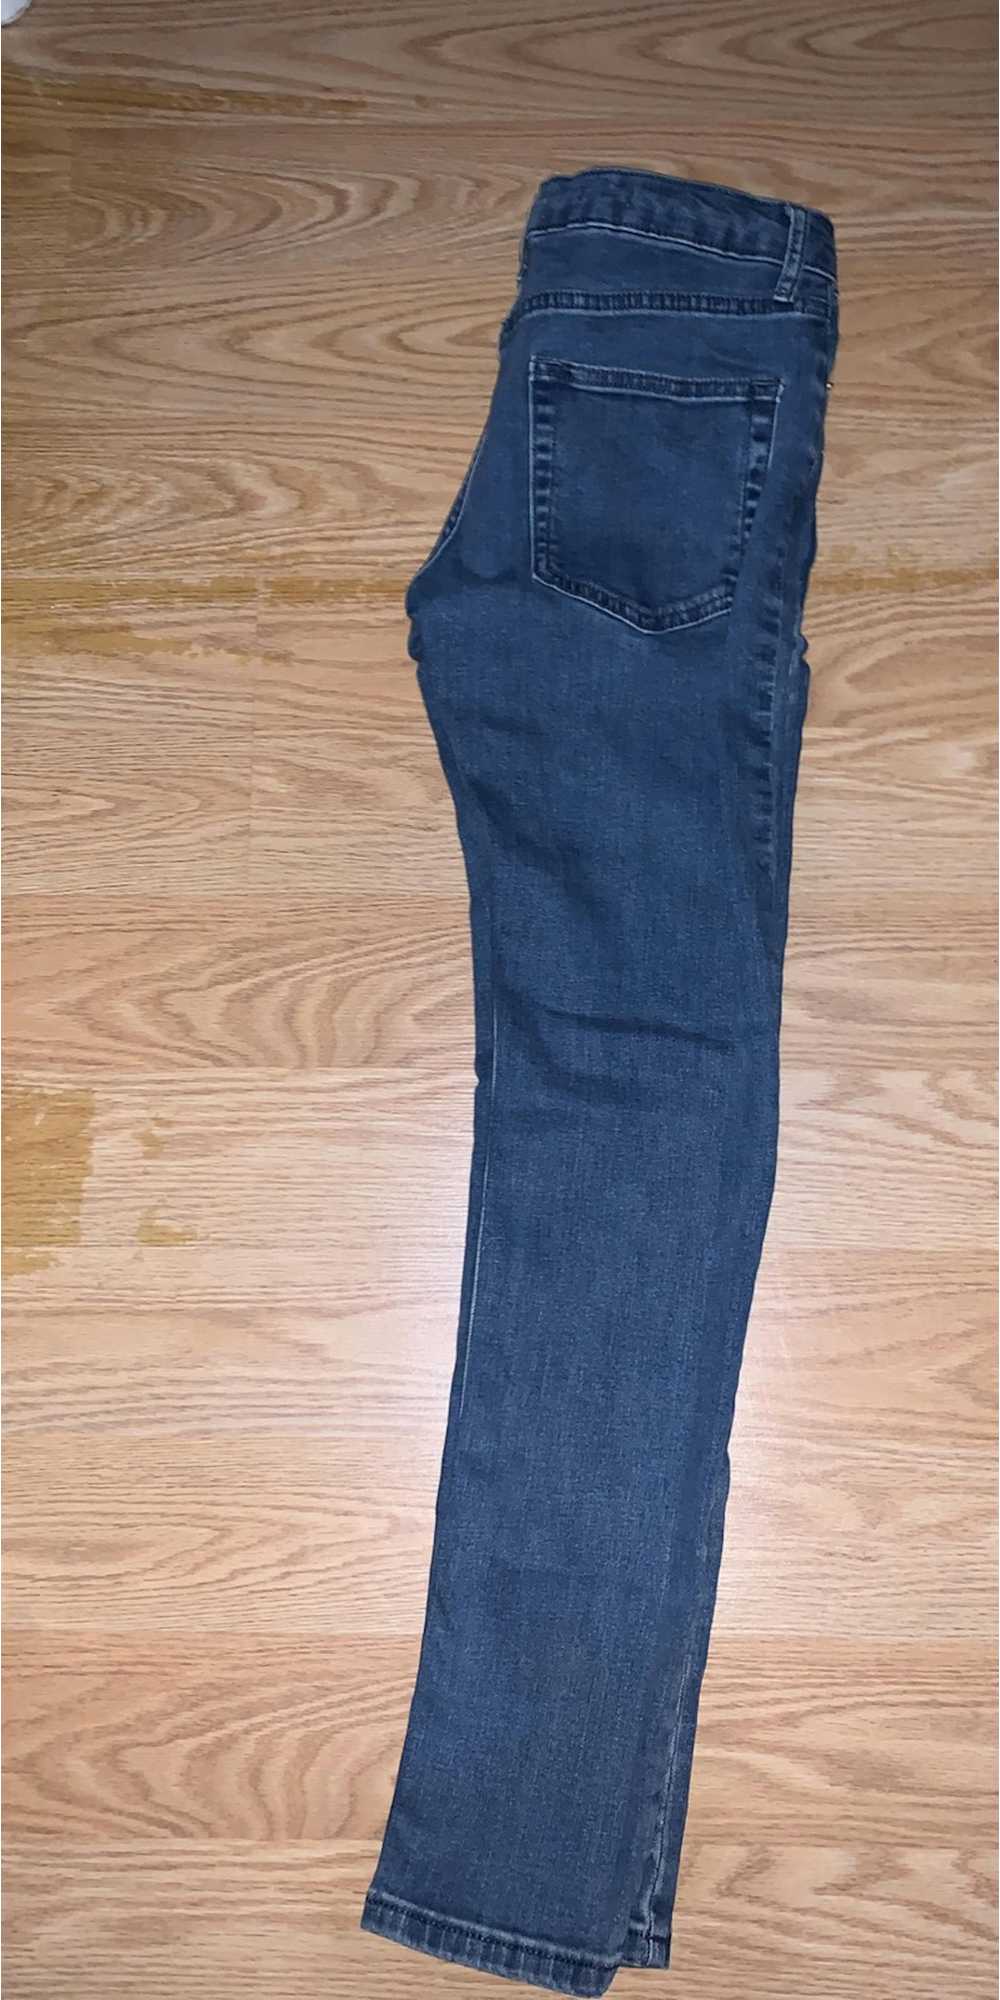 Topman Topman Stretch Skinny Blue Jeans - image 2